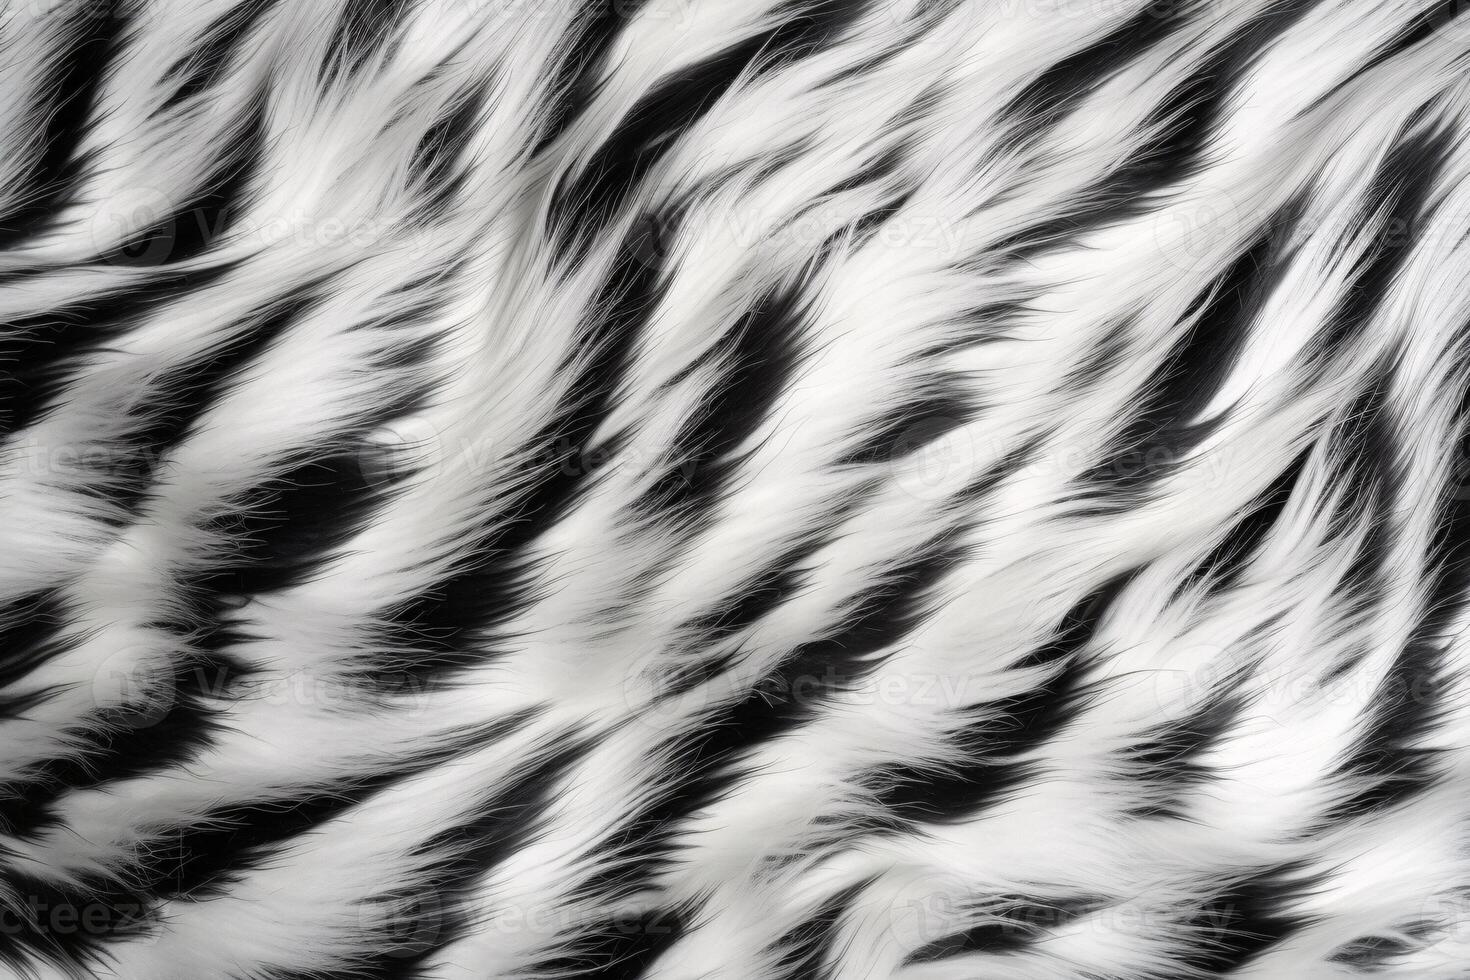 Zebra Haut Pelz Textur, Zebra Pelz Hintergrund, flauschige Zebra Haut Pelz Textur, Zebra Haut Pelz Muster, Tier Haut Pelz Textur, Zebra drucken, foto